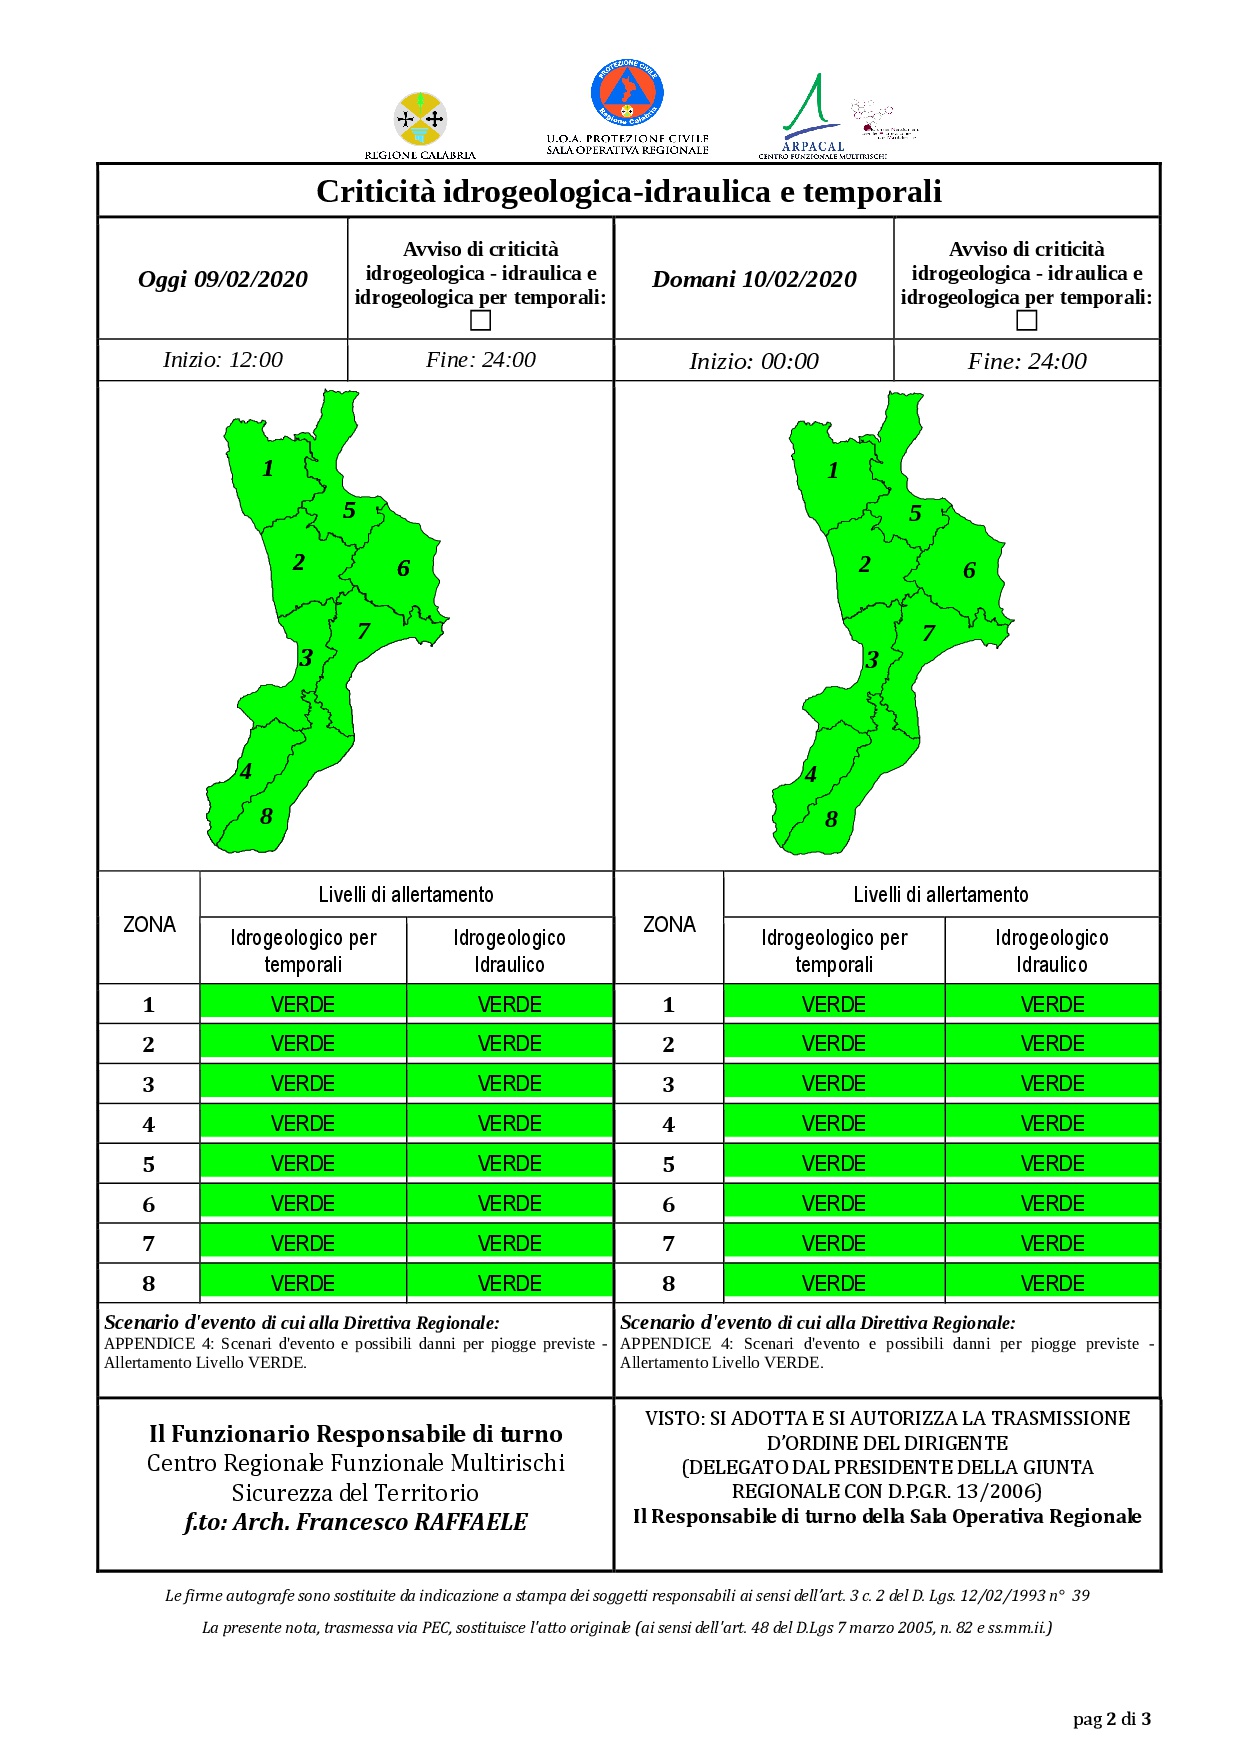 Criticità idrogeologica-idraulica e temporali in Calabria 09-02-2020